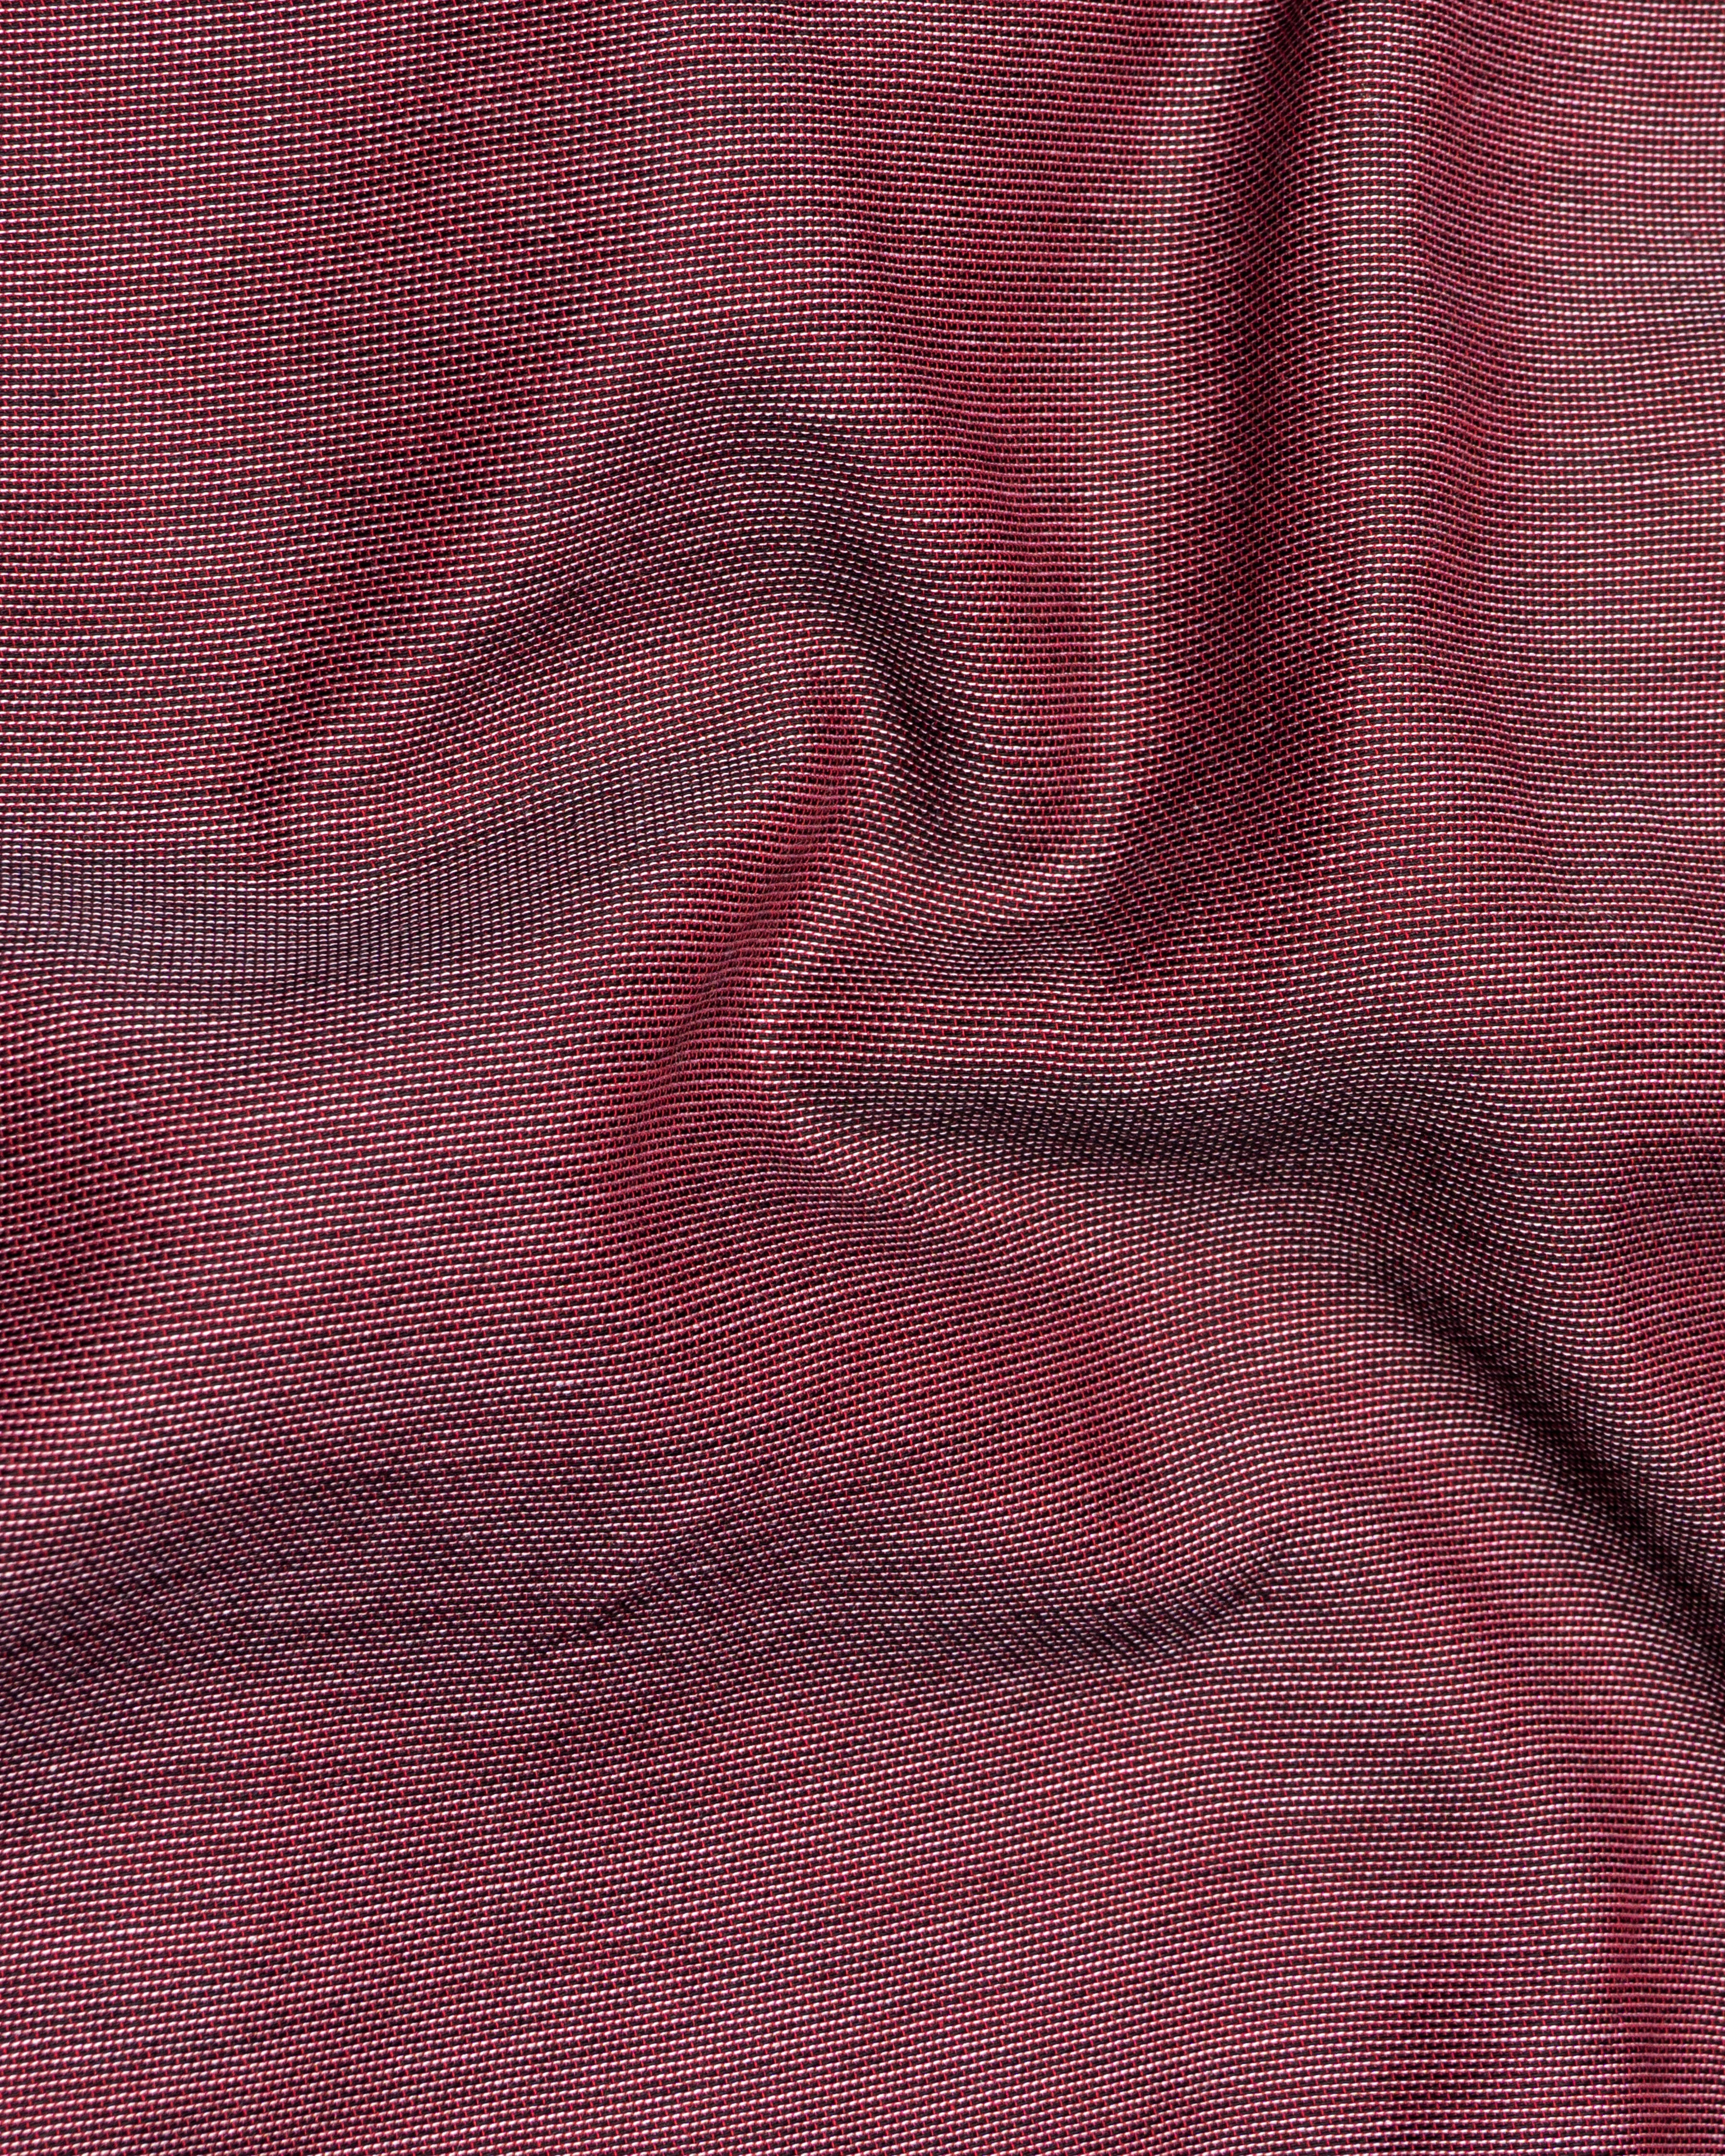 Byzantium Brown Embroidered Dobby Textured Premium Giza Cotton Shirt 6259-CA-MN-E077-38, 6259-CA-MN-E077-H-38, 6259-CA-MN-E077-39, 6259-CA-MN-E077-H-39, 6259-CA-MN-E077-40, 6259-CA-MN-E077-H-40, 6259-CA-MN-E077-42, 6259-CA-MN-E077-H-42, 6259-CA-MN-E077-44, 6259-CA-MN-E077-H-44, 6259-CA-MN-E077-46, 6259-CA-MN-E077-H-46, 6259-CA-MN-E077-48, 6259-CA-MN-E077-H-48, 6259-CA-MN-E077-50, 6259-CA-MN-E077-H-50, 6259-CA-MN-E077-52, 6259-CA-MN-E077-H-52